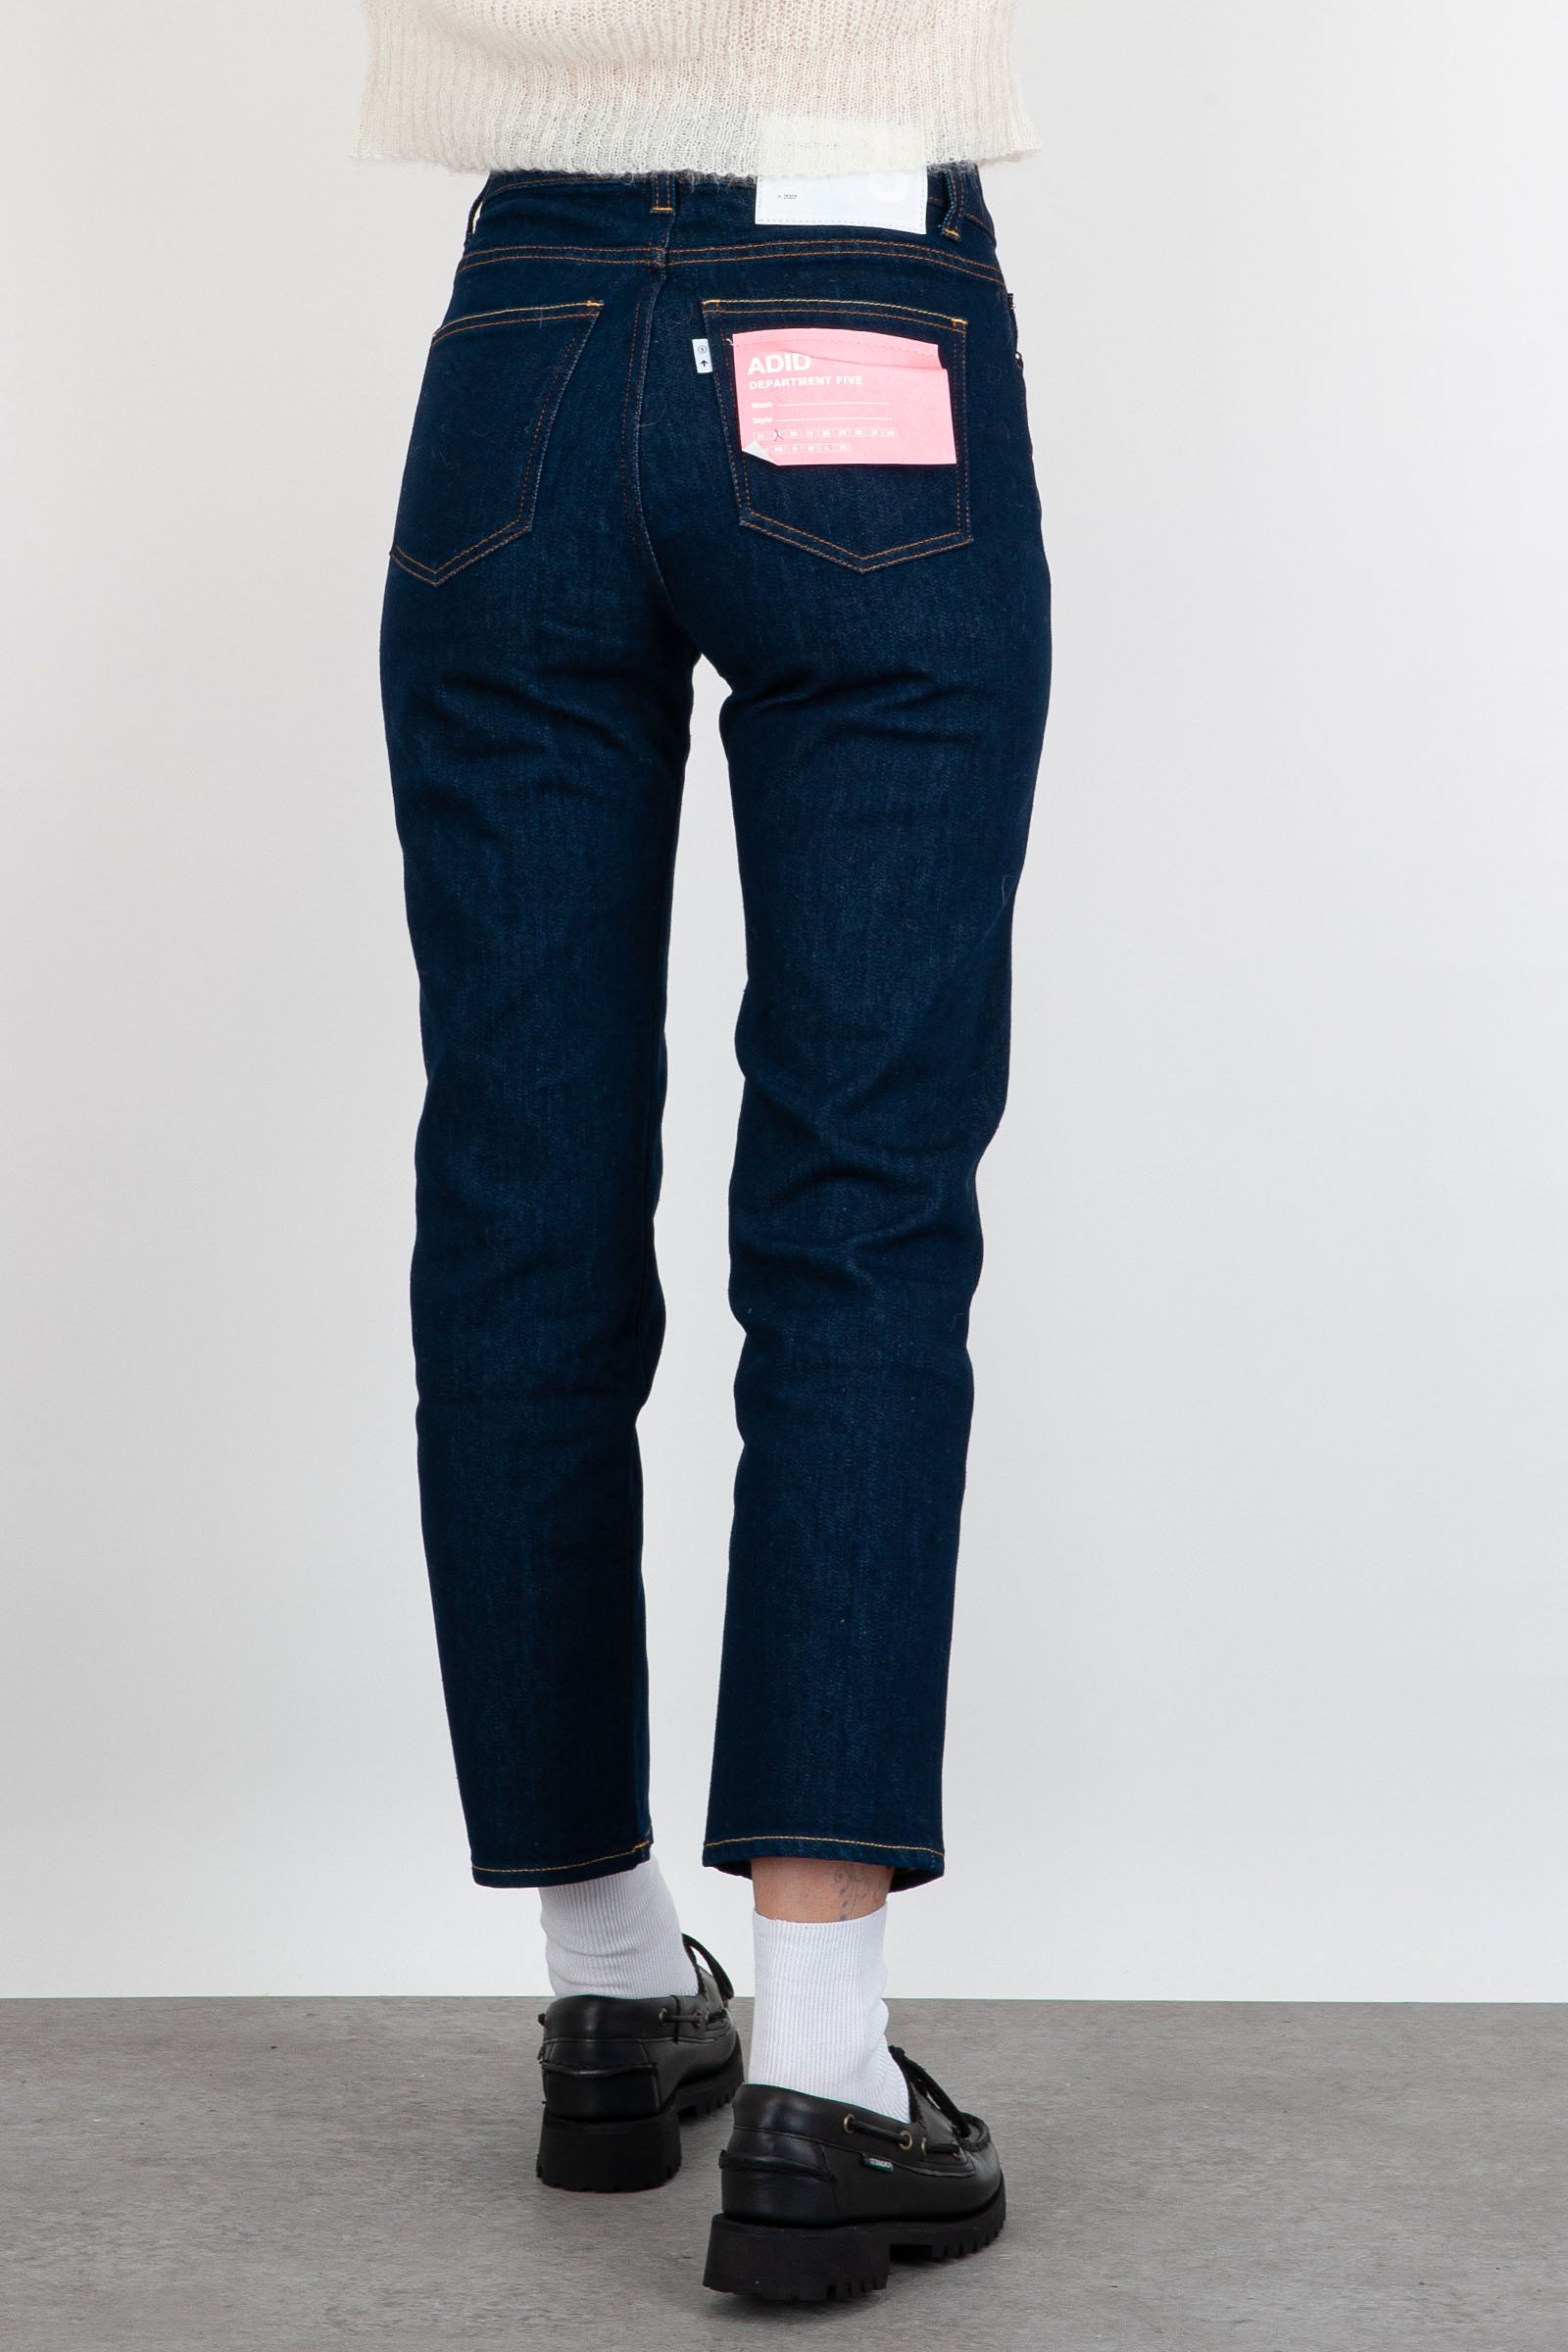 Adid Medium Blue Women's Jeans - 3